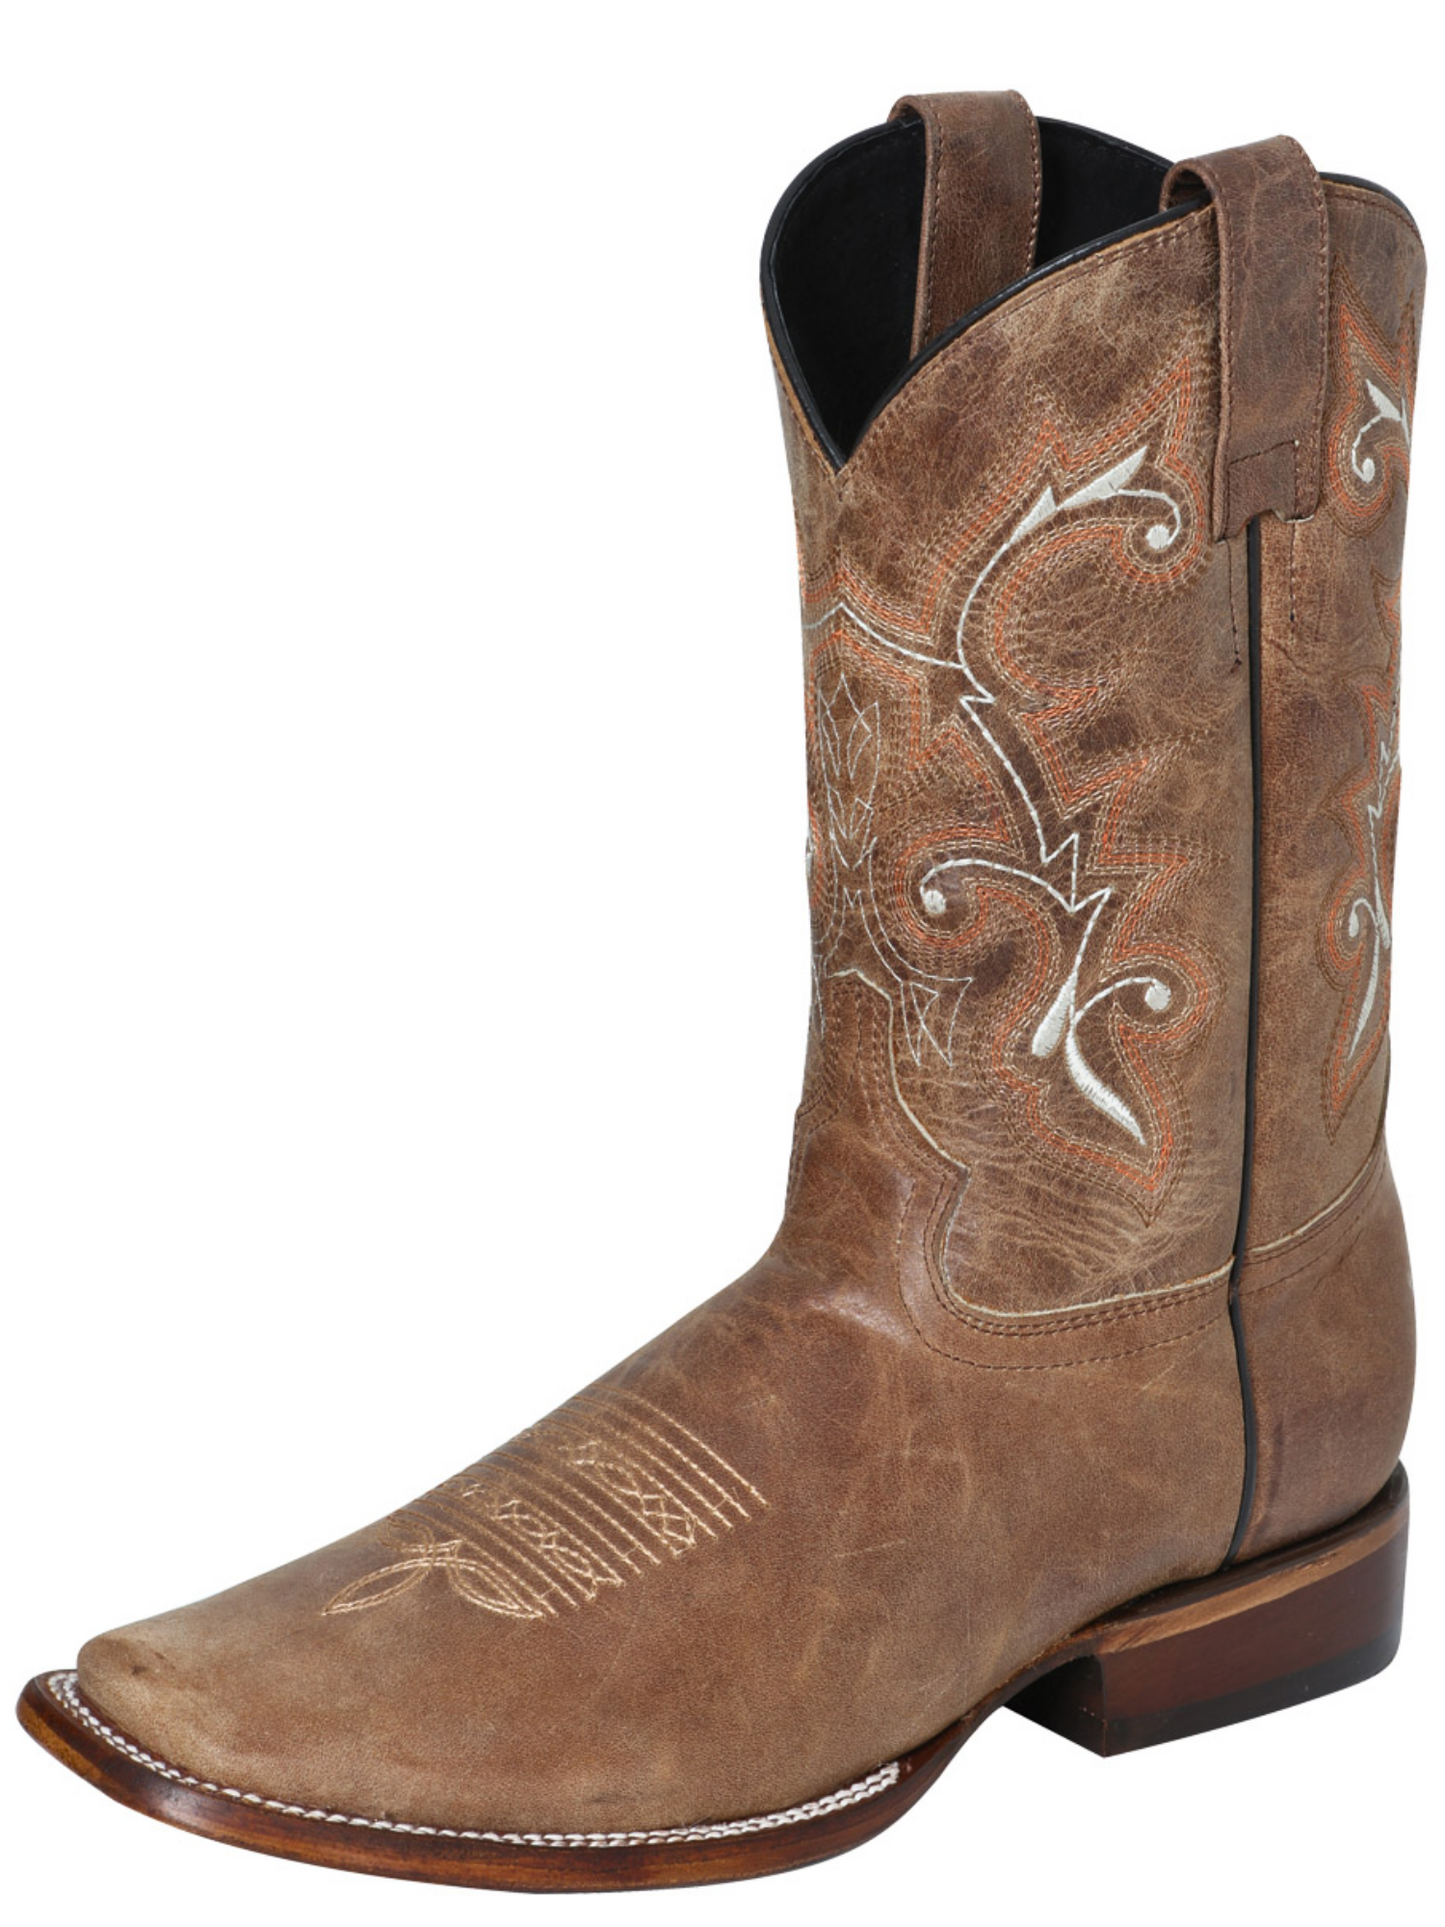 Classic Genuine Leather Rodeo Cowboy Boots for Men 'El Señor de los Cielos' - ID: 124068 Cowboy Boots El Señor de los Cielos Tang